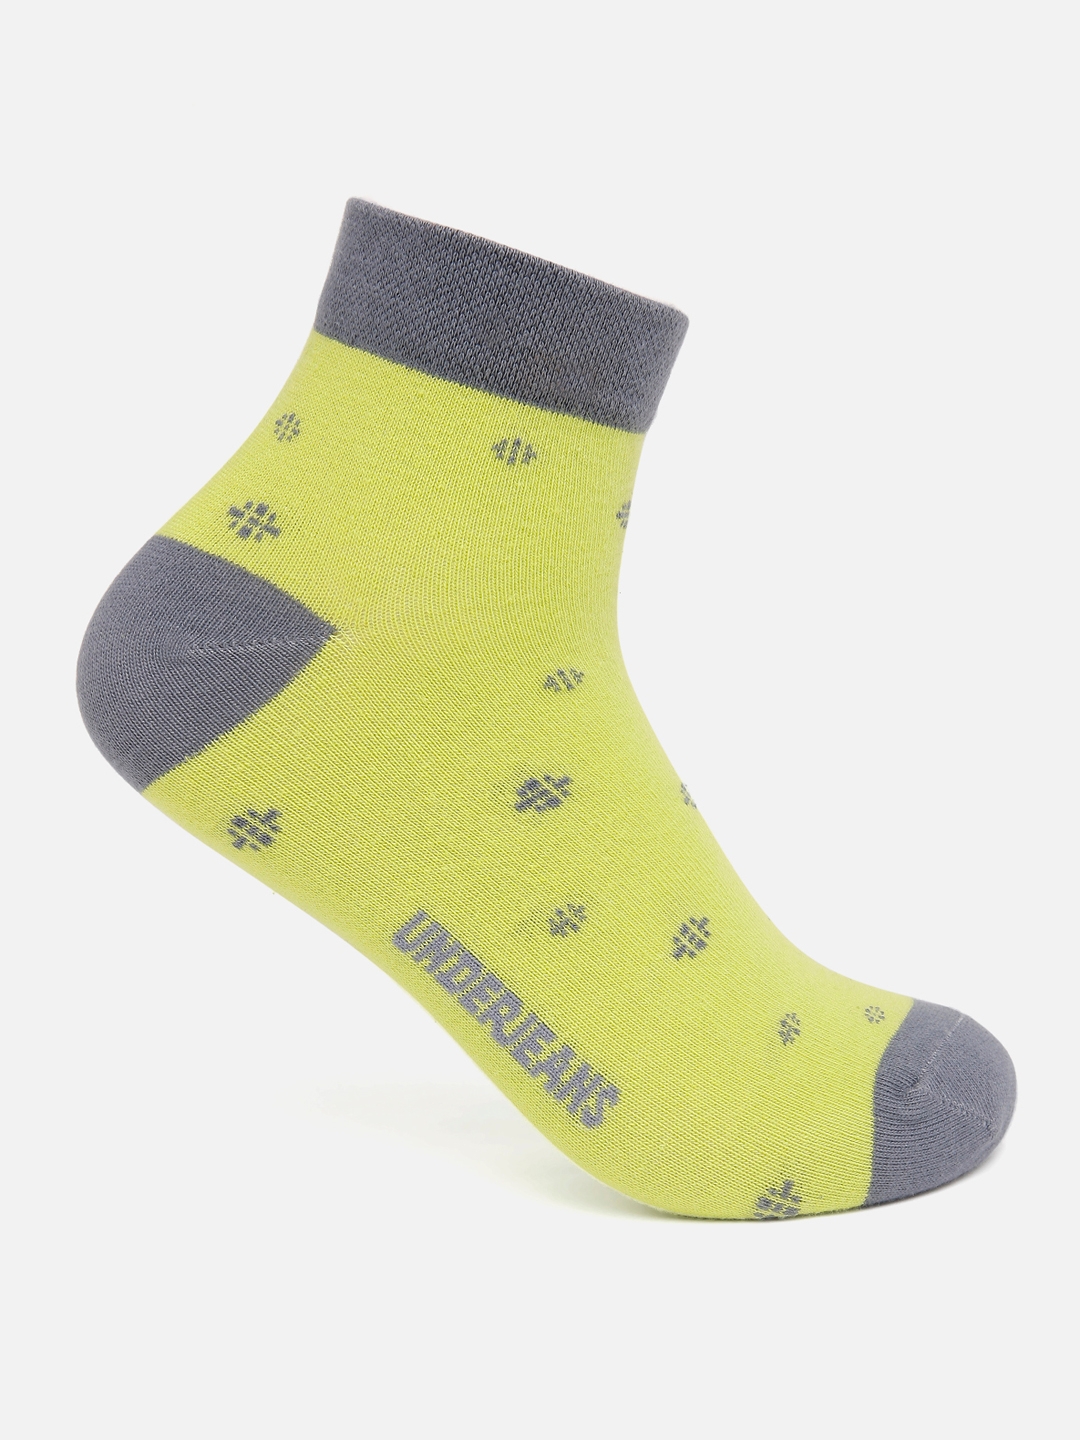 Spykar | Underjeans by Spykar Men P.Green-Grey Ankle Length (Non Terry) Single Pair of Socks